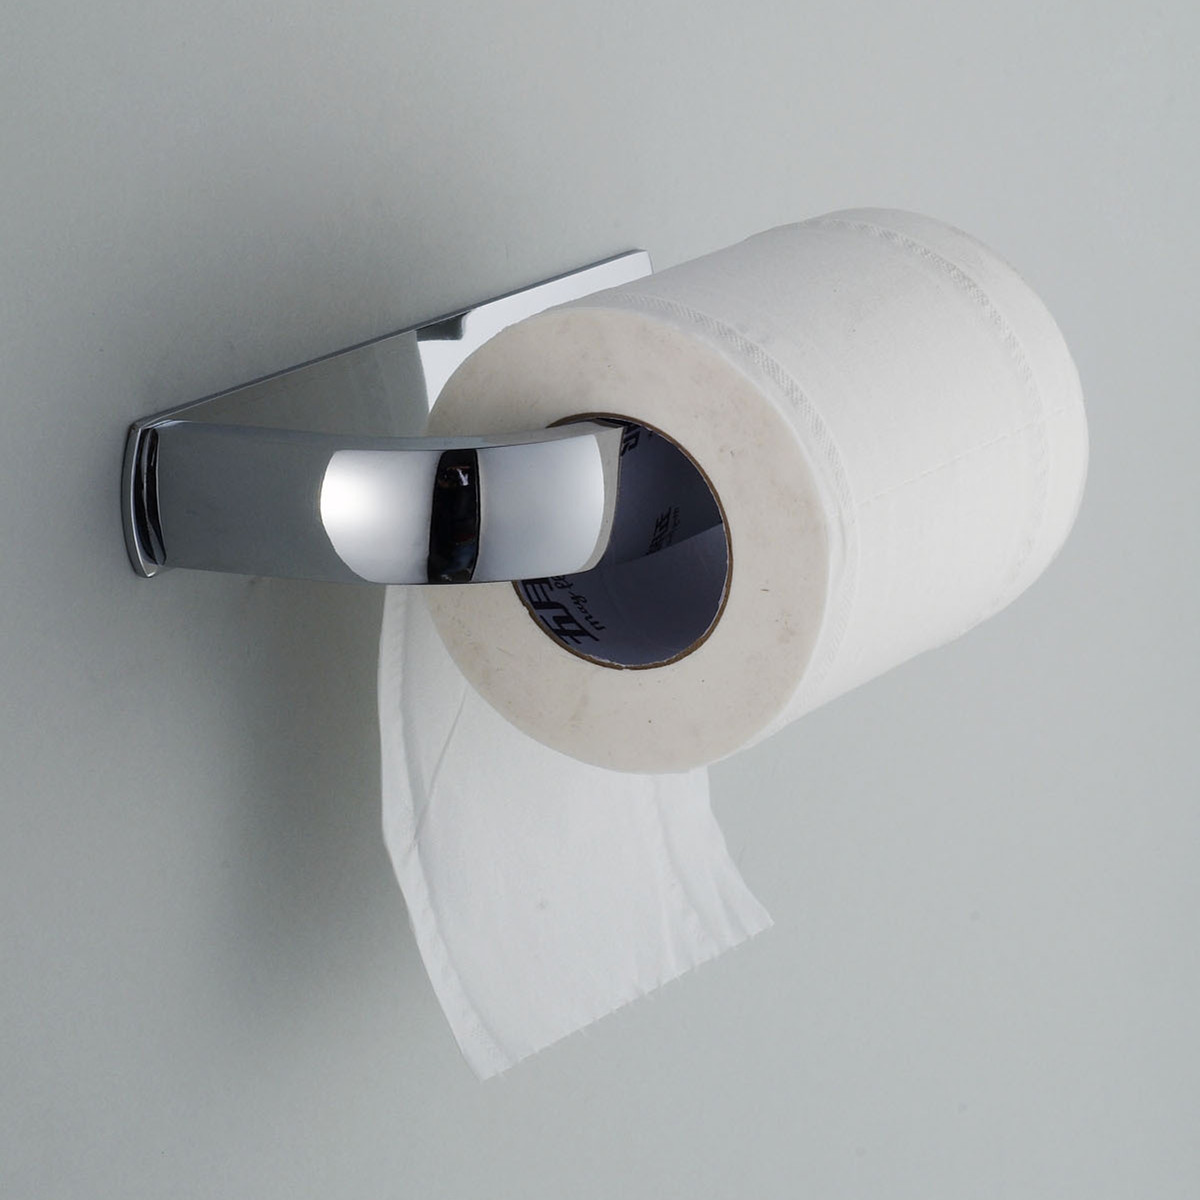 Stainless-Steel-Bathroom-Paper-Shelf-Holder-Tissue-Roll-Rack-Stand-Brecket-Wall-Mount-1333052-8